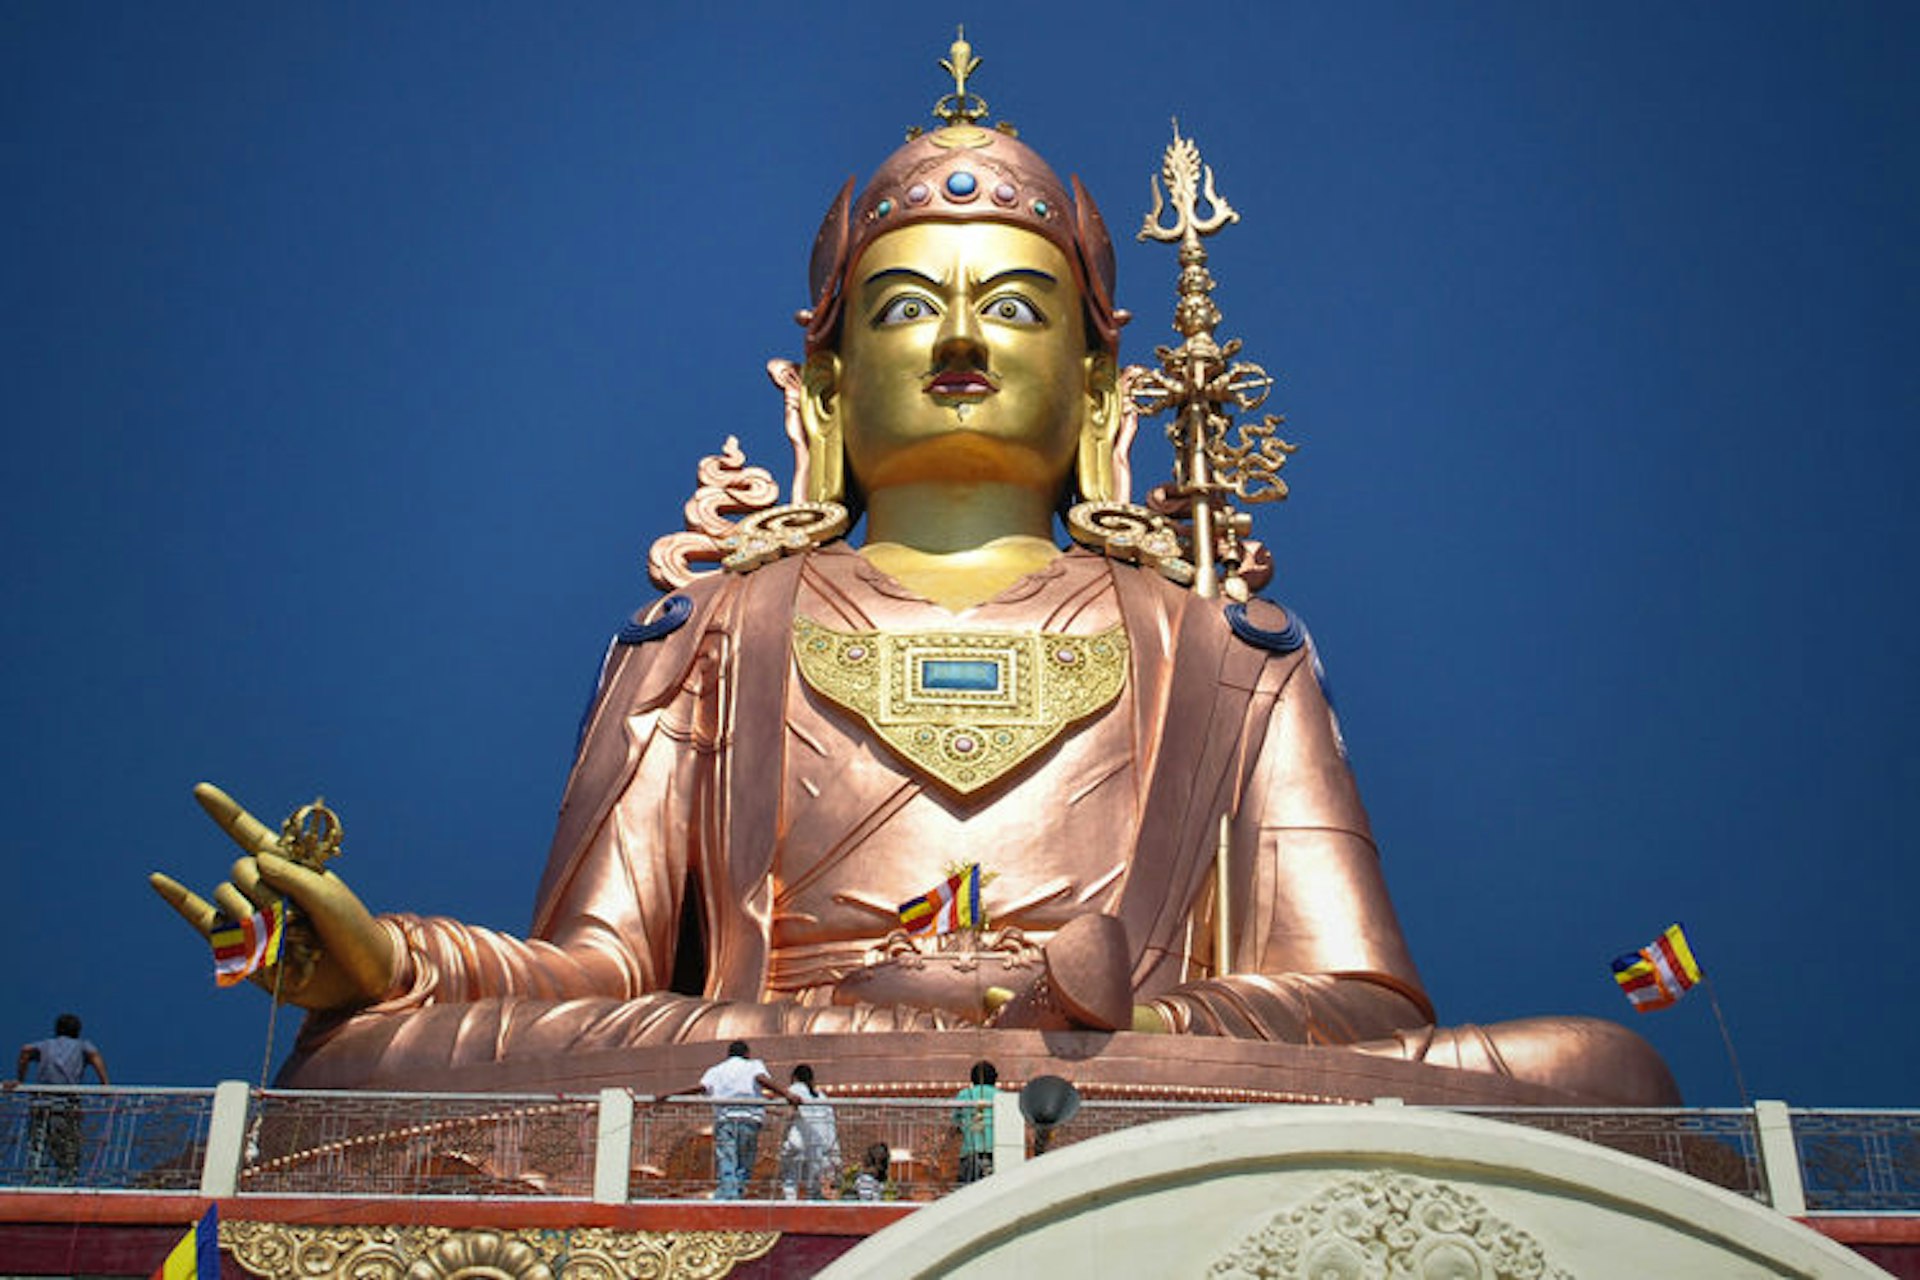 Monumental statue of Guru Rinpoche, Namchi, Sikkim. Image by Sudarsan Tamang / CC BY 2.0.